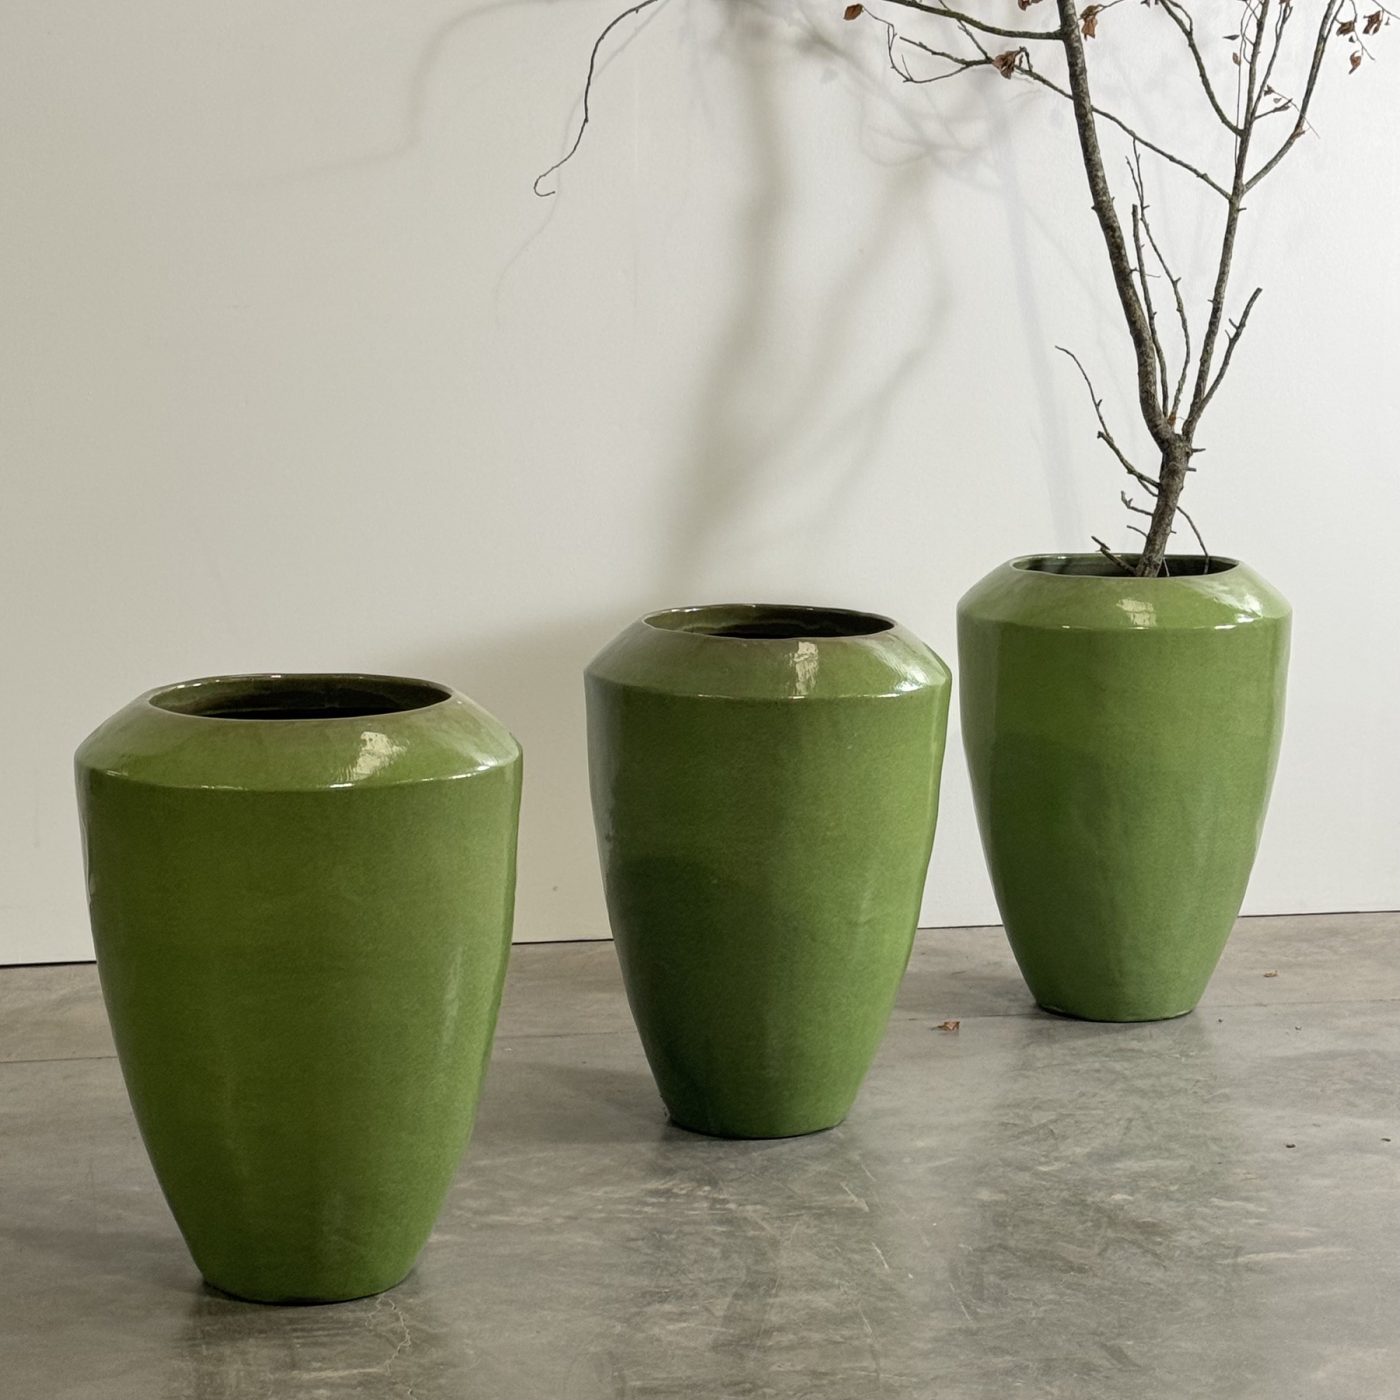 objet-vagabond-pottery-jars0008